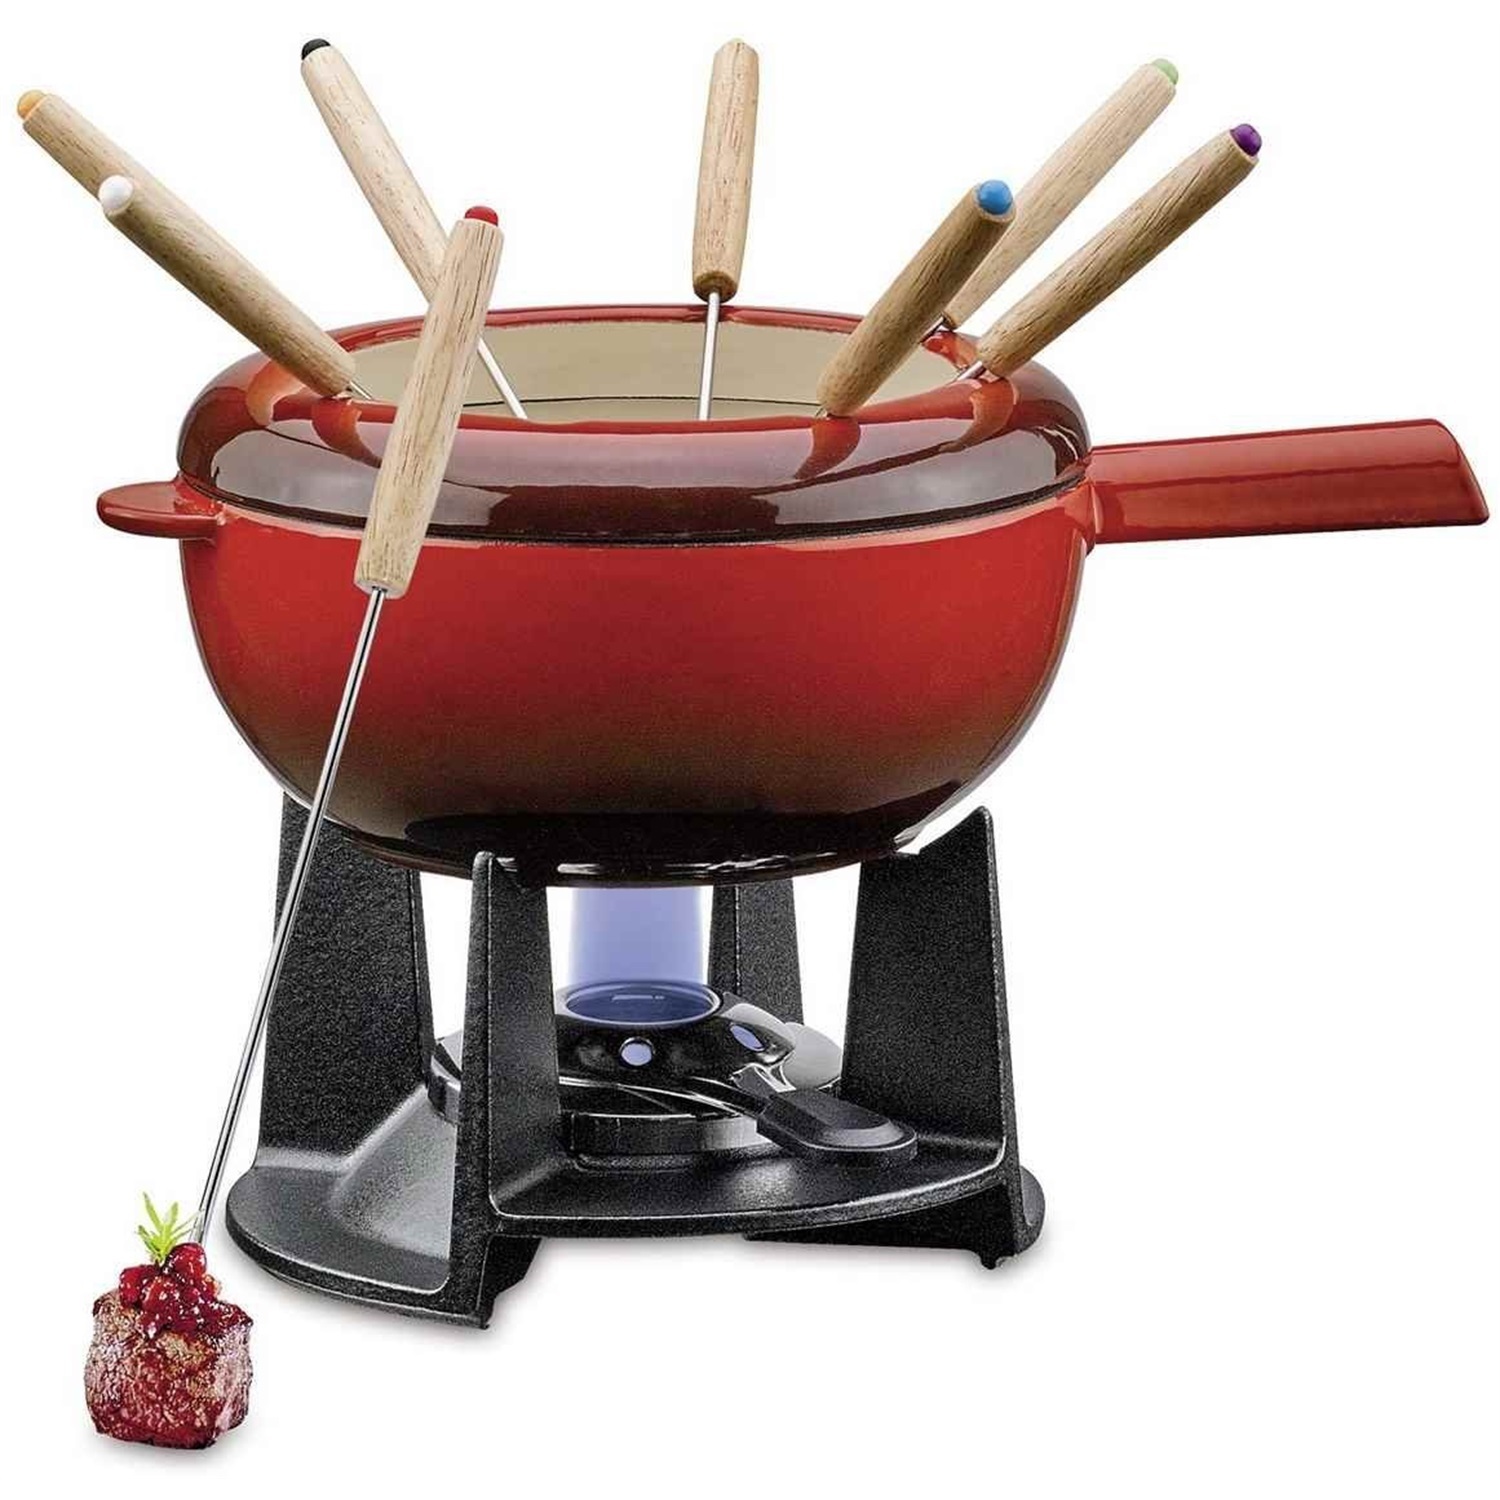 Spring garnitur fondueset rood